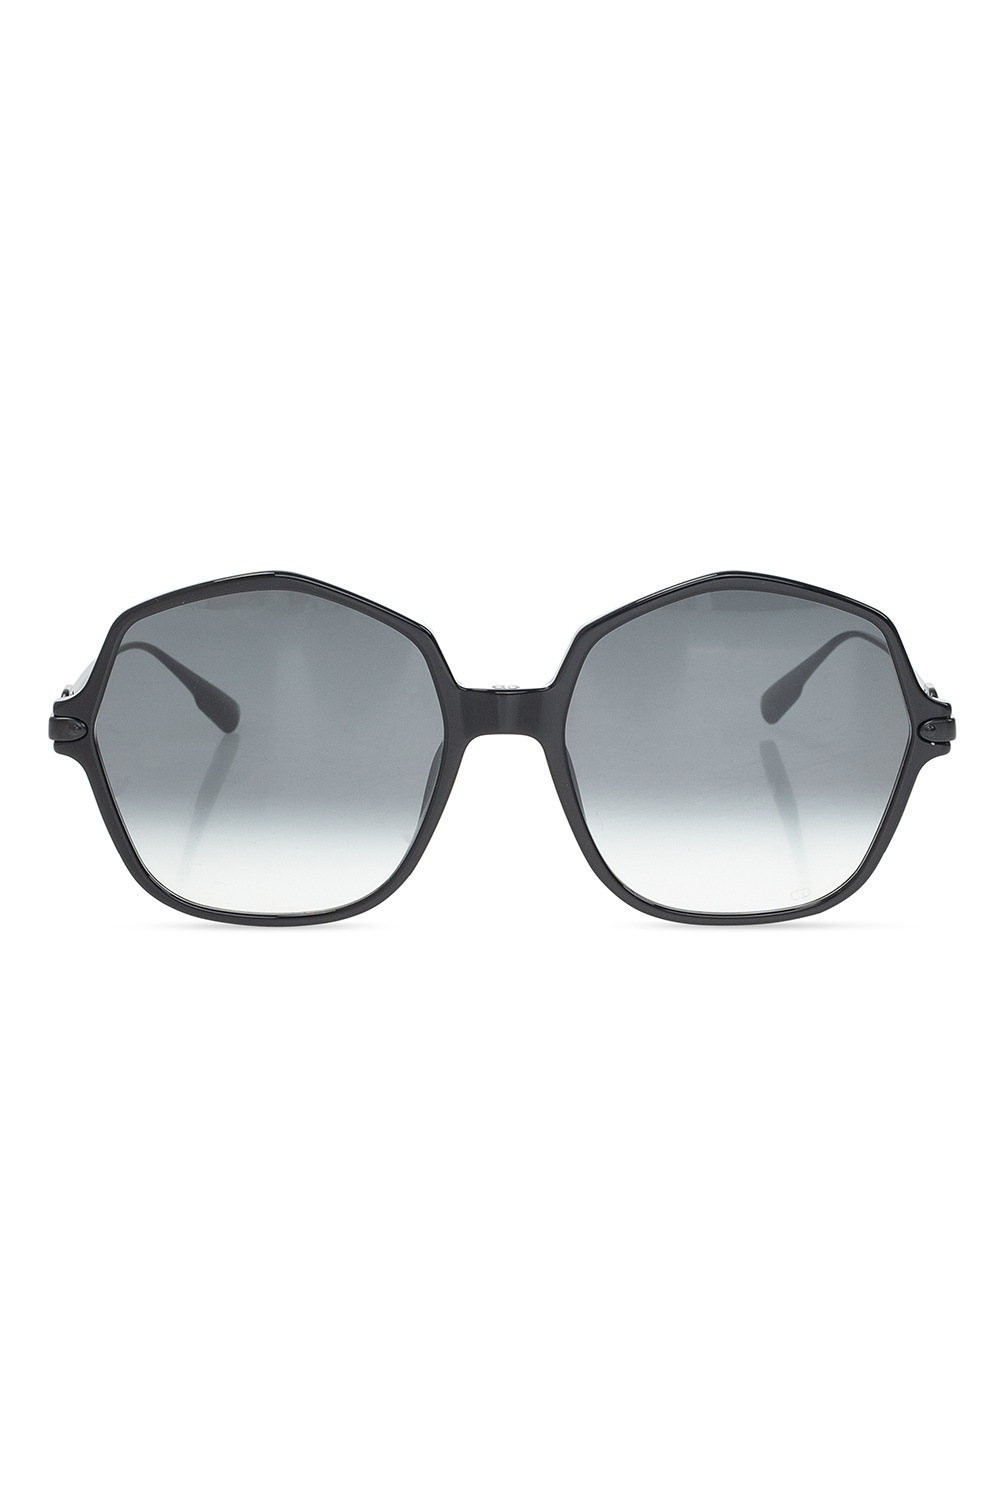 Dior sunglasses Diorlink2 Womens Fashion Watches  Accessories  Sunglasses  Eyewear on Carousell